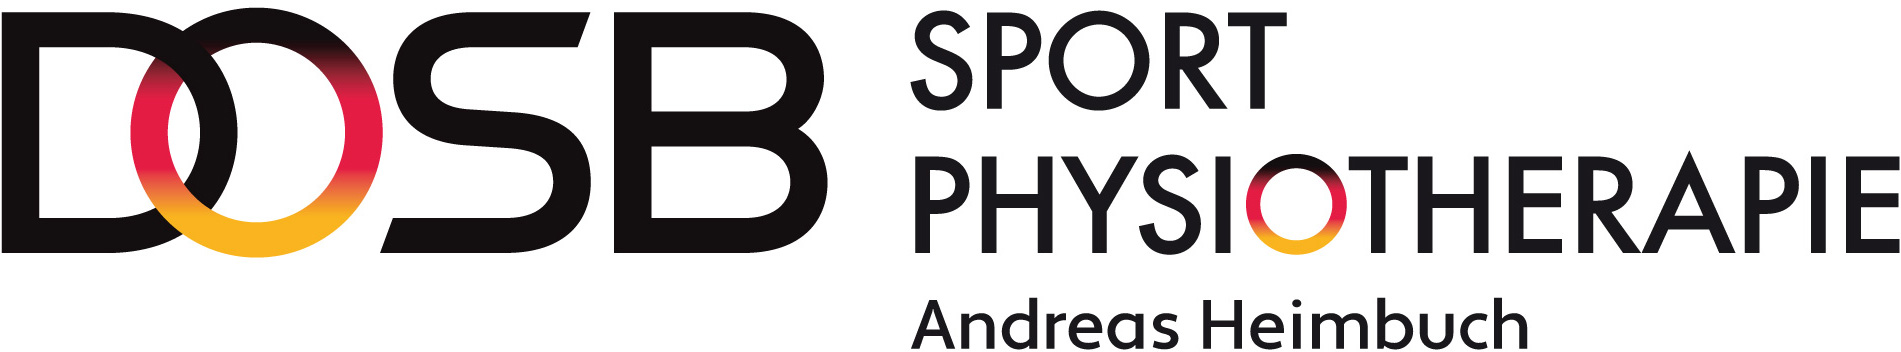 DOSB-Sportphysiotherapie – Andreas Heimbuch